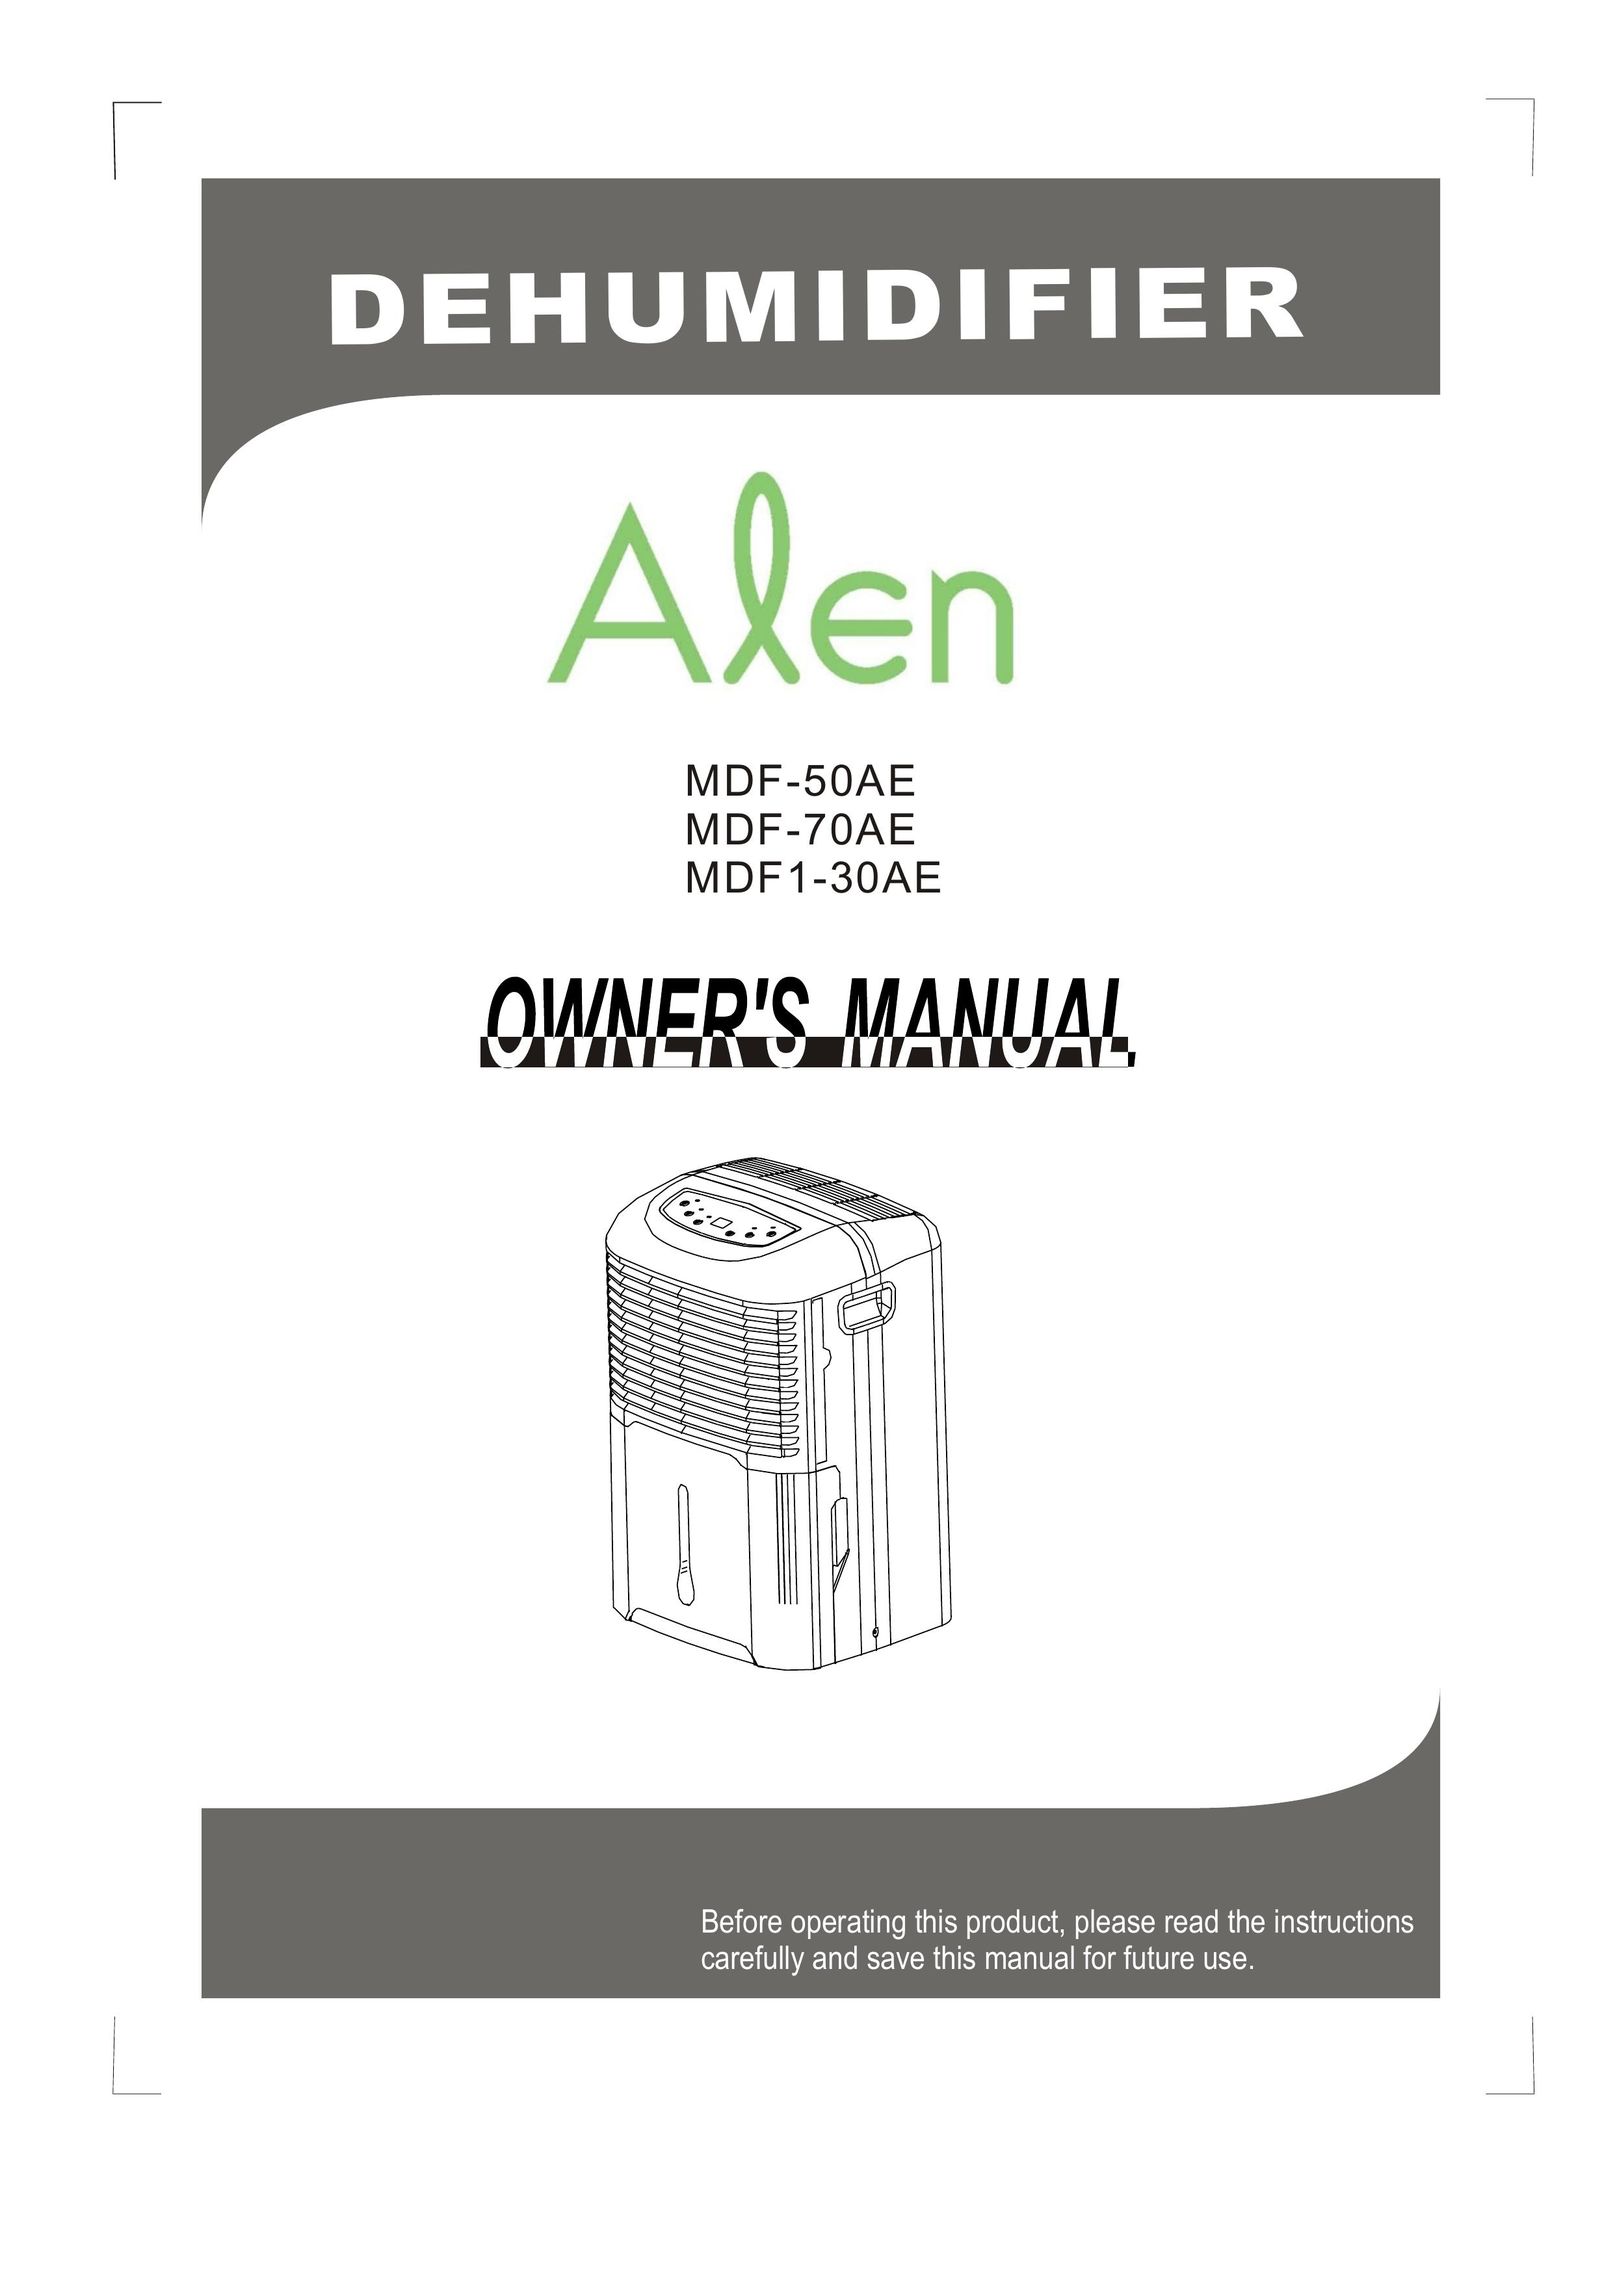 Alen MDF-70AE Dehumidifier User Manual